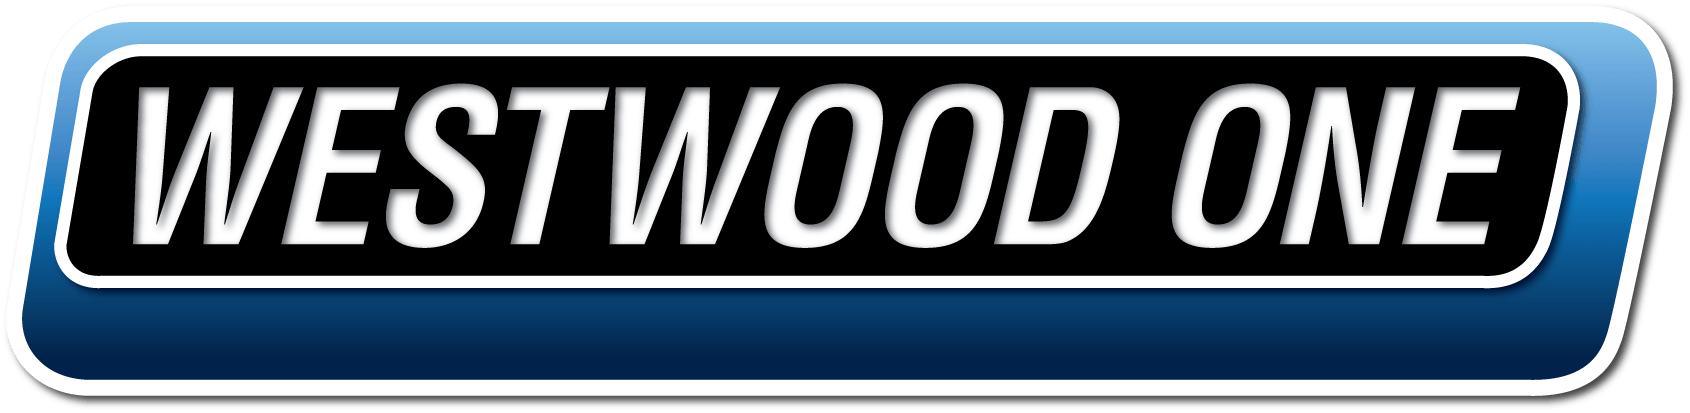 2010 Ww1 Logo - Westwood One (1690x413), Png Download